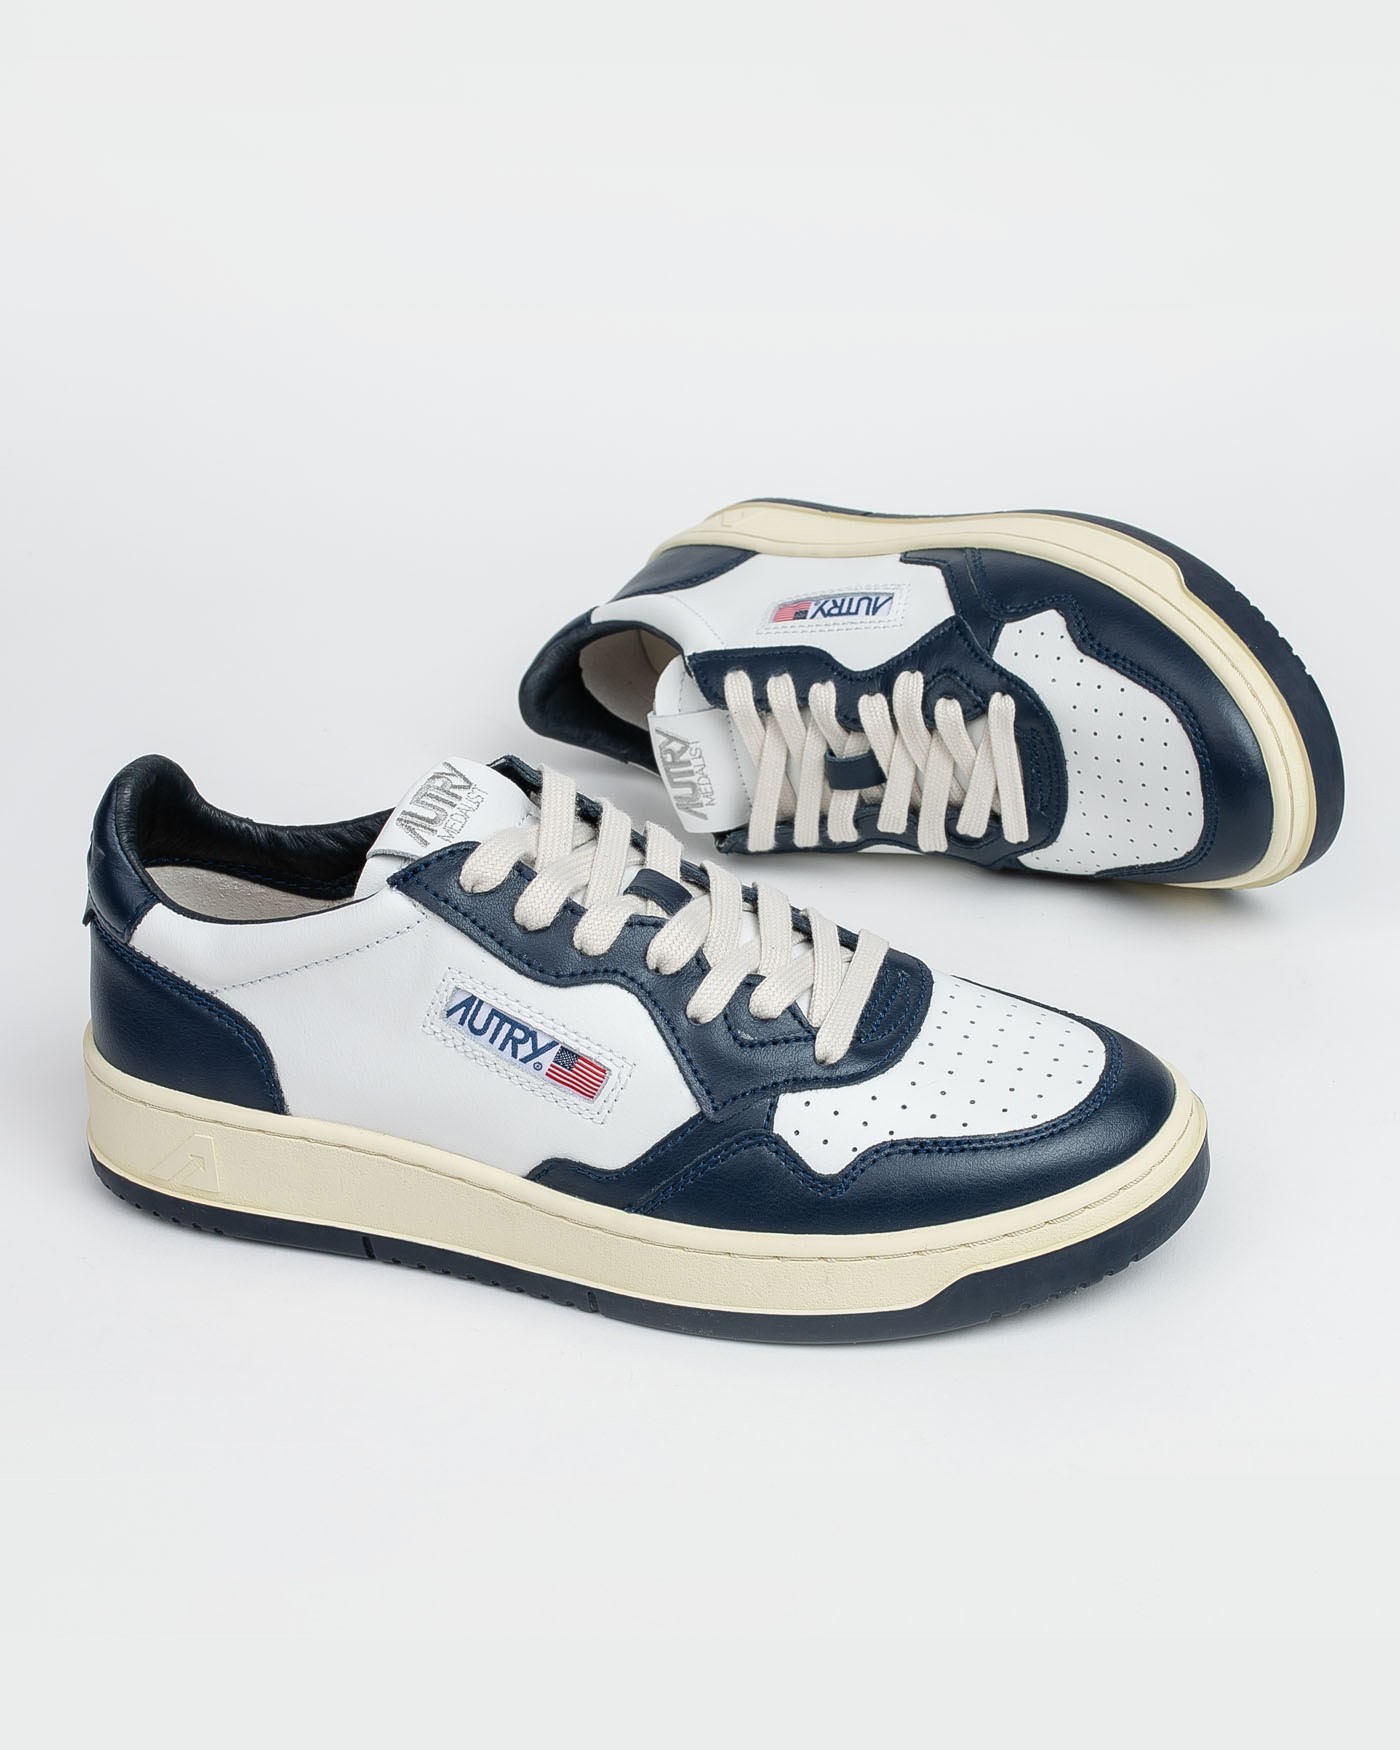 autry-zapatillas-low-sneakers-aulm-wb04-white-navy-blanco-azul-marino (4)